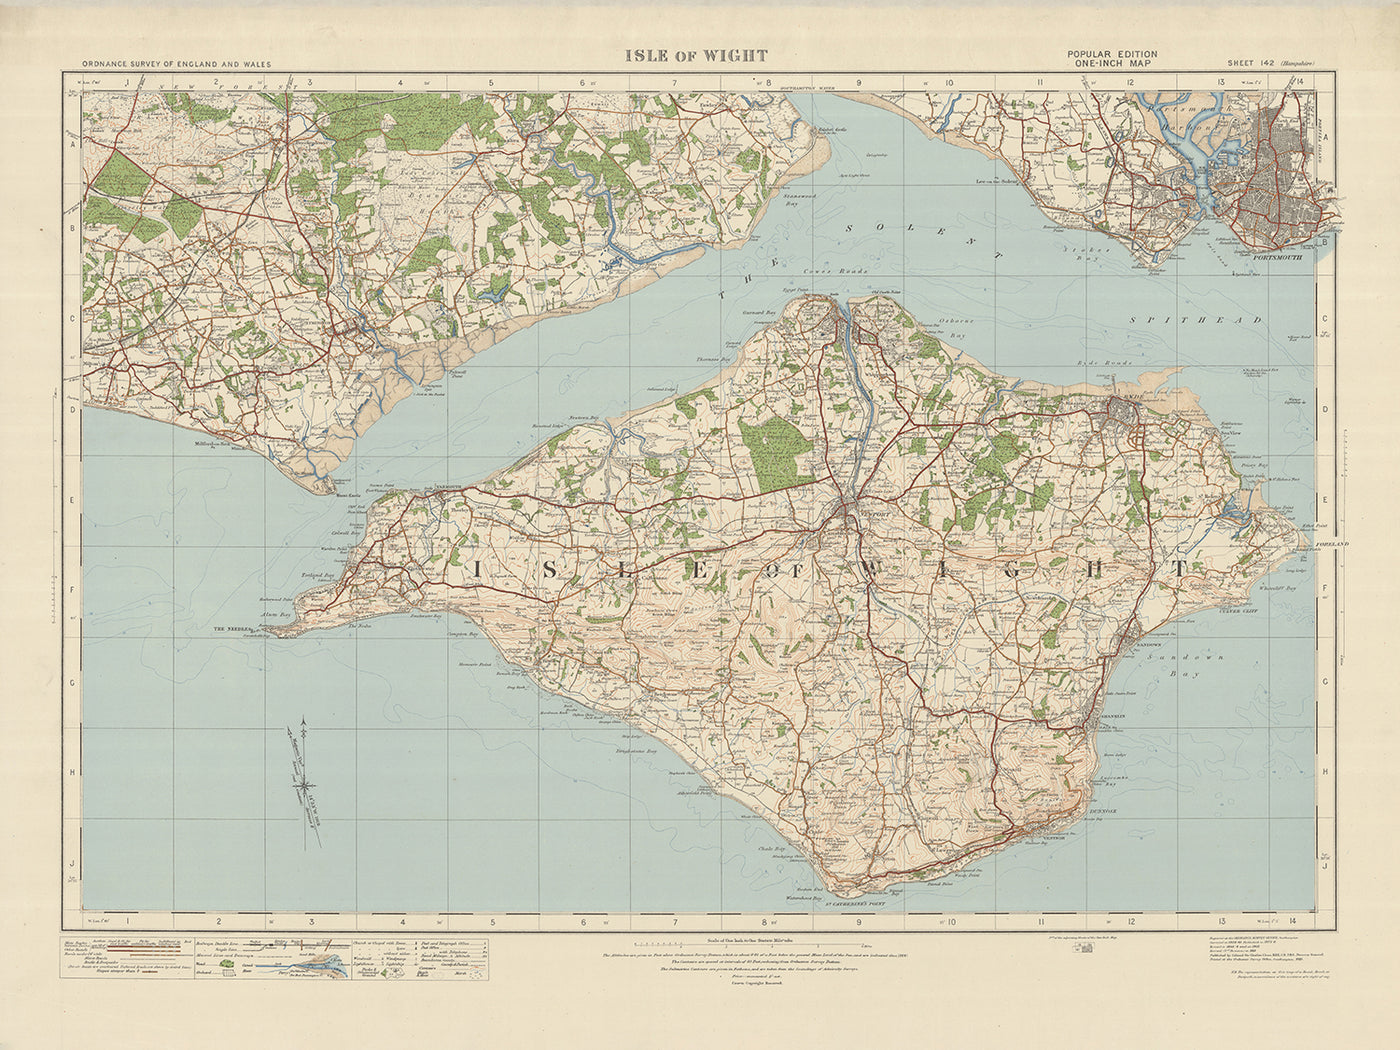 Old Ordnance Survey Map, Sheet 142 - Isle of Wight, 1919-1926: Portsmouth, Newport, Ryde, Cowes, Gosport, Carisbrooke Castle, The Needles, Osborne House